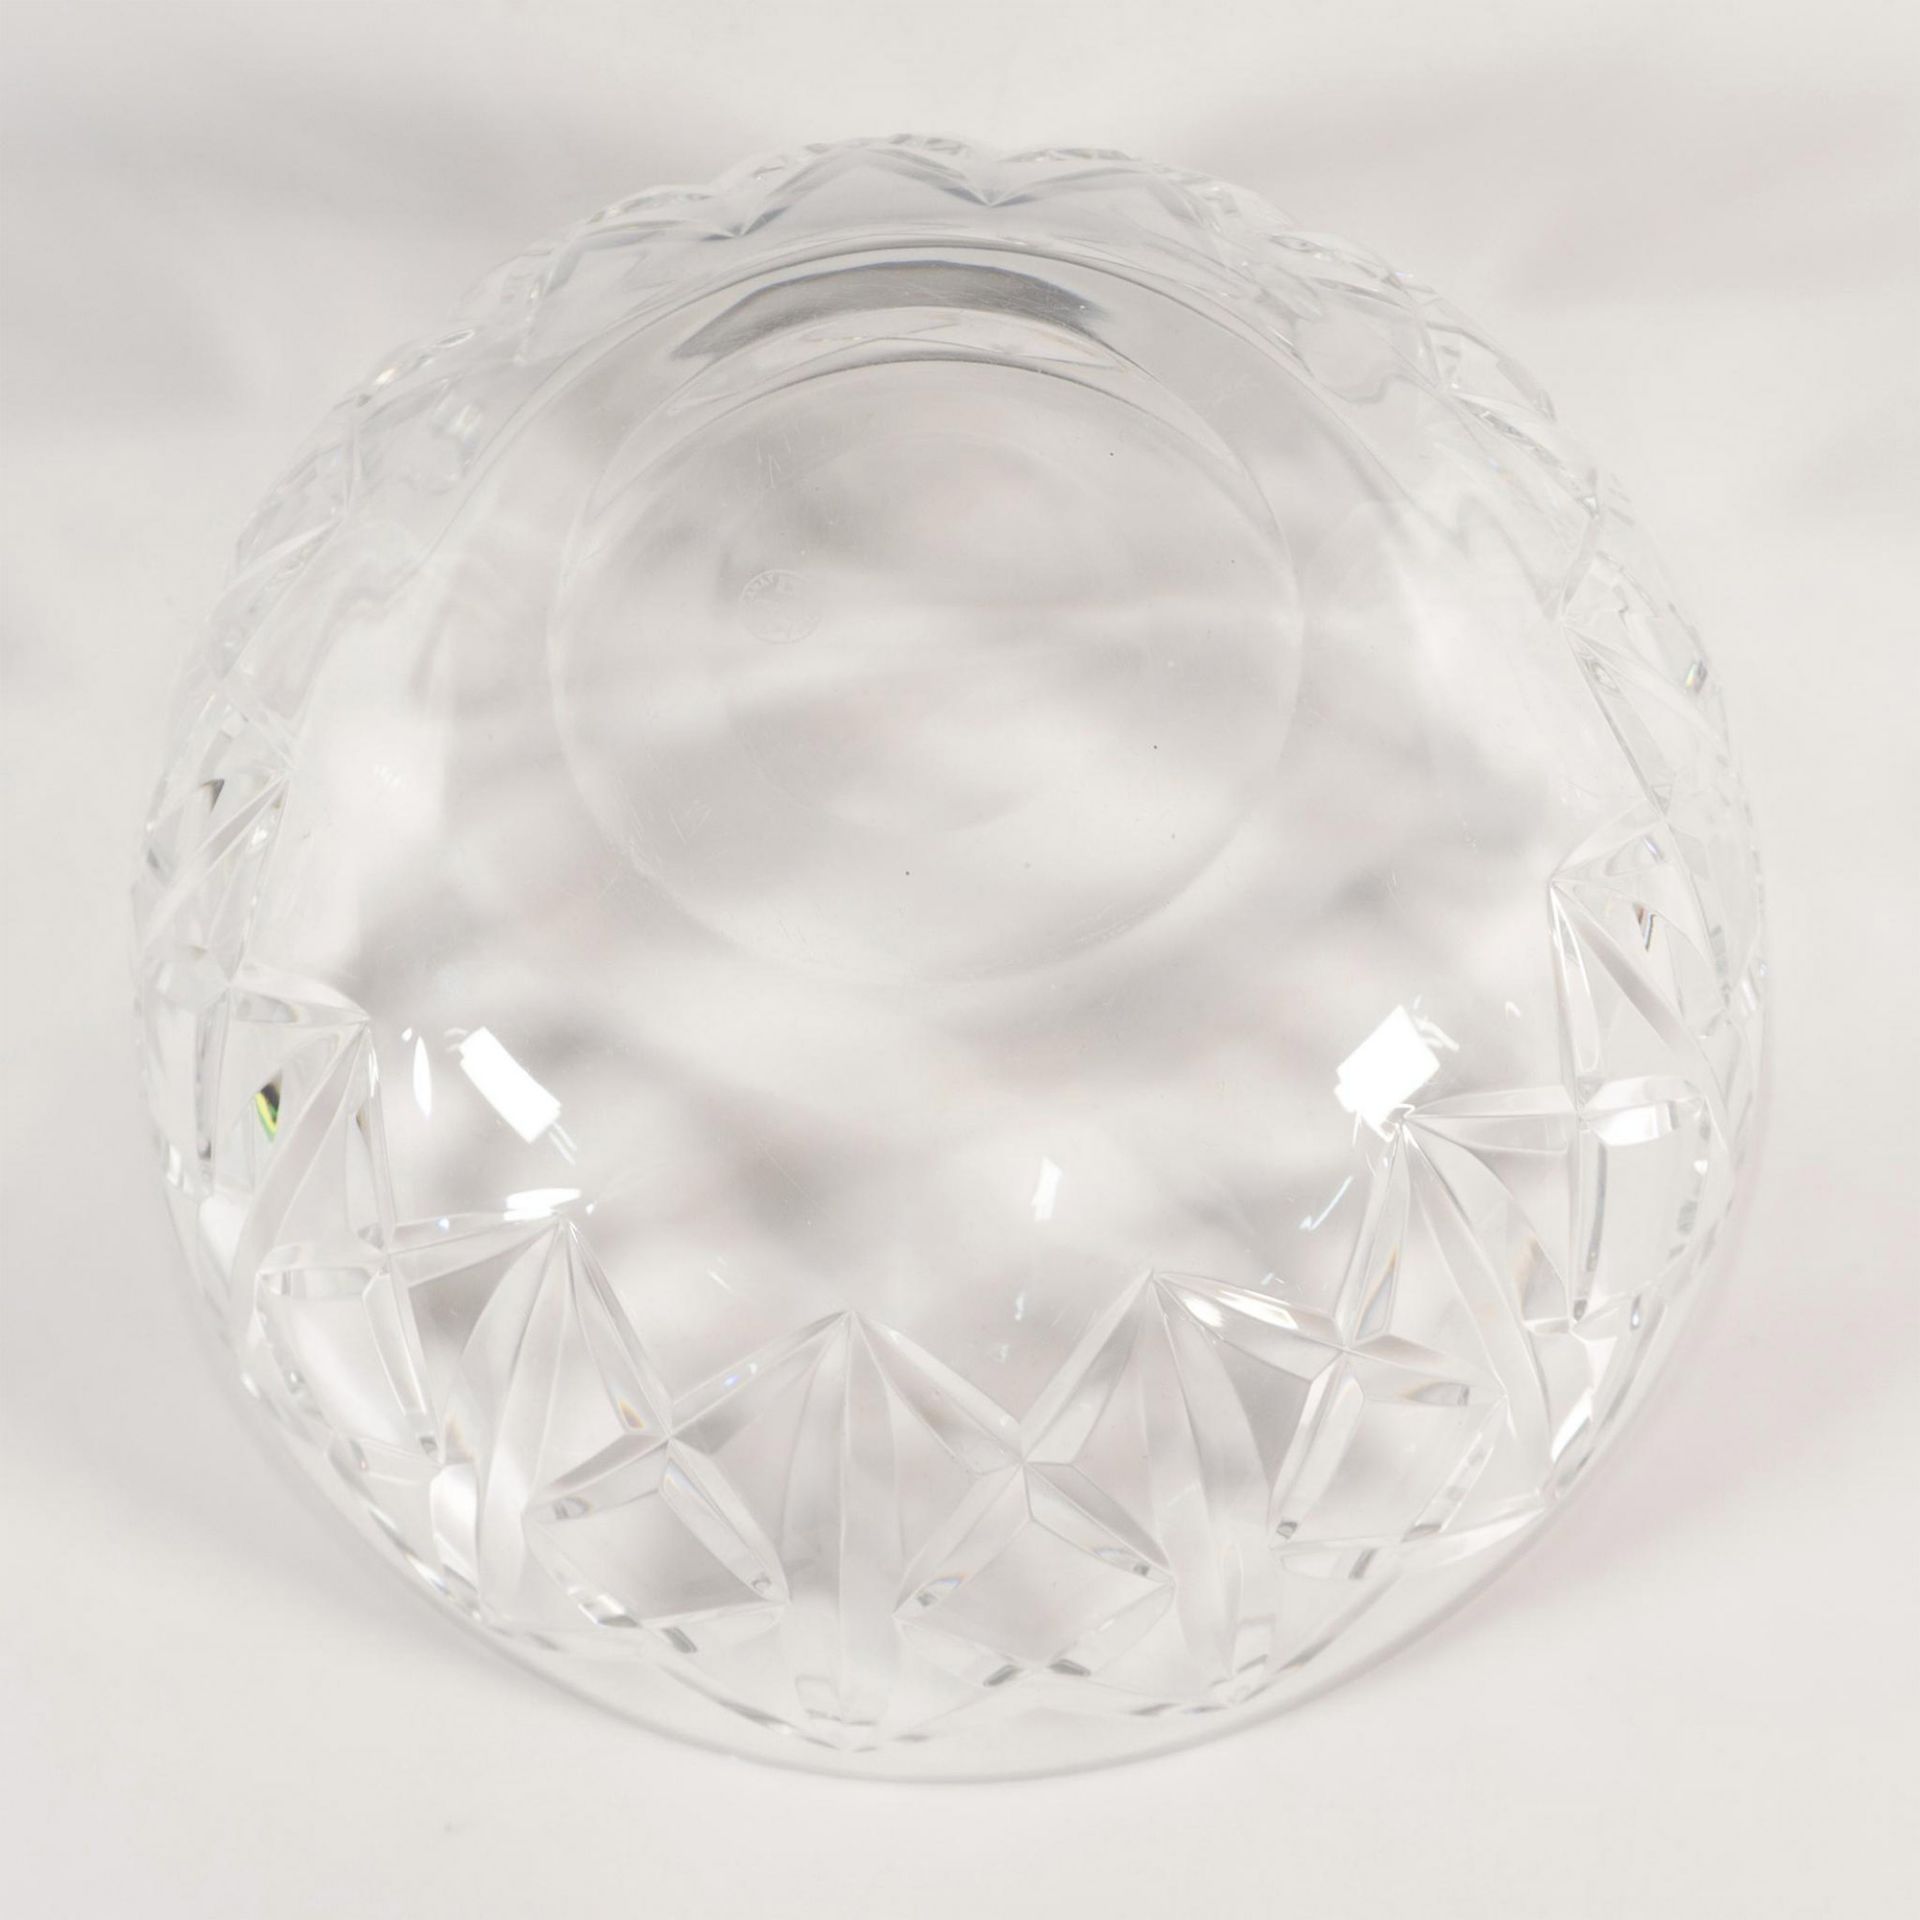 Baccarat Crystal Bowl - Image 3 of 3